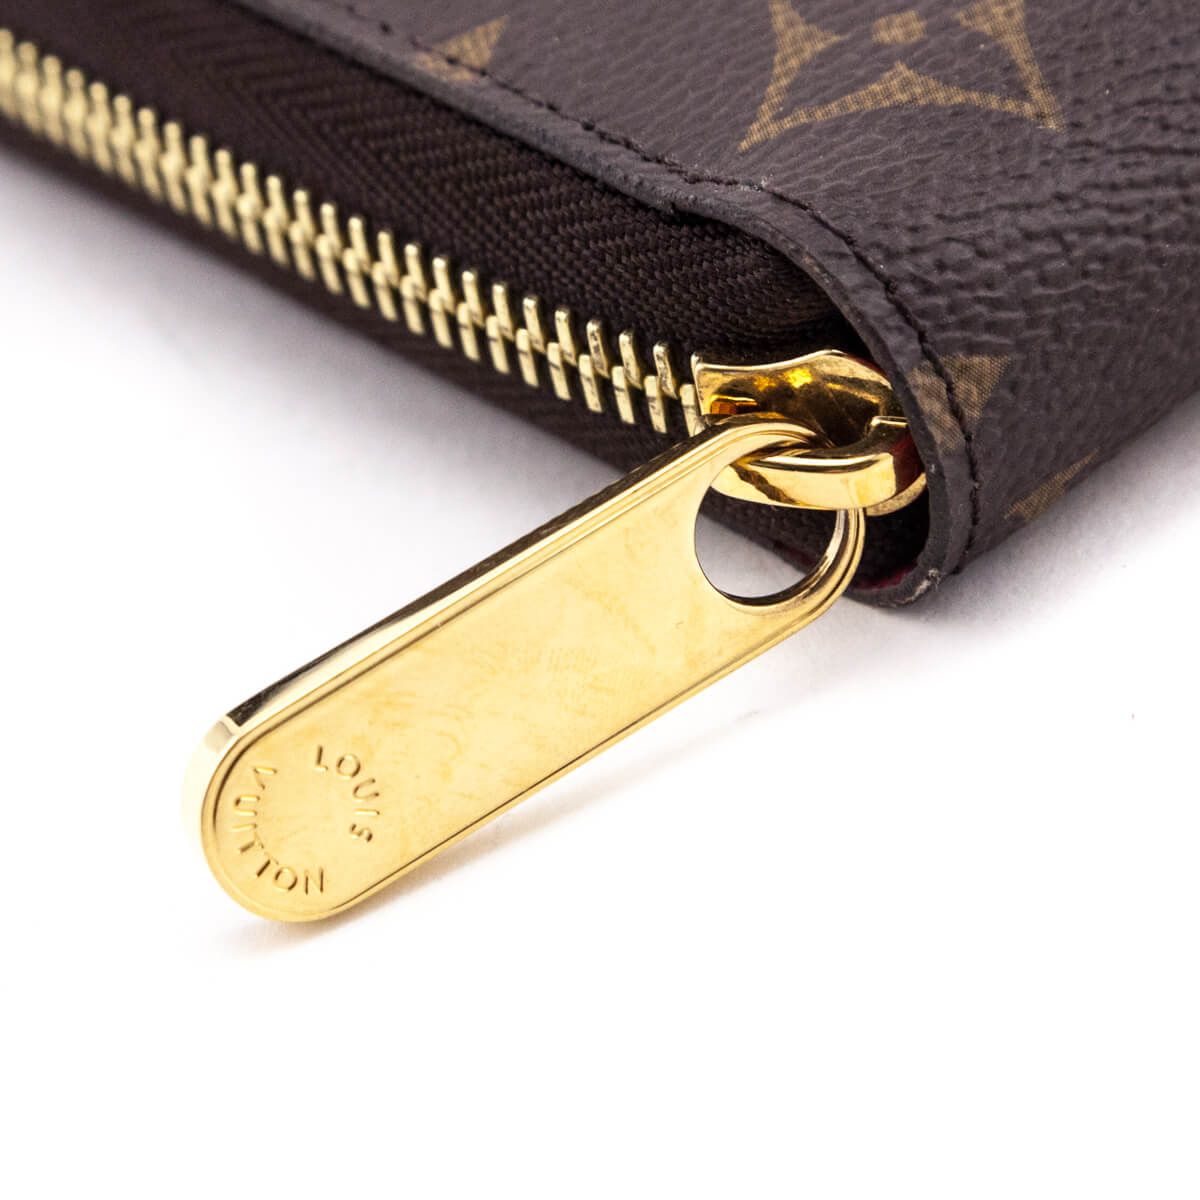 Louis Vuitton Monogram Zippy Wallet on Sale